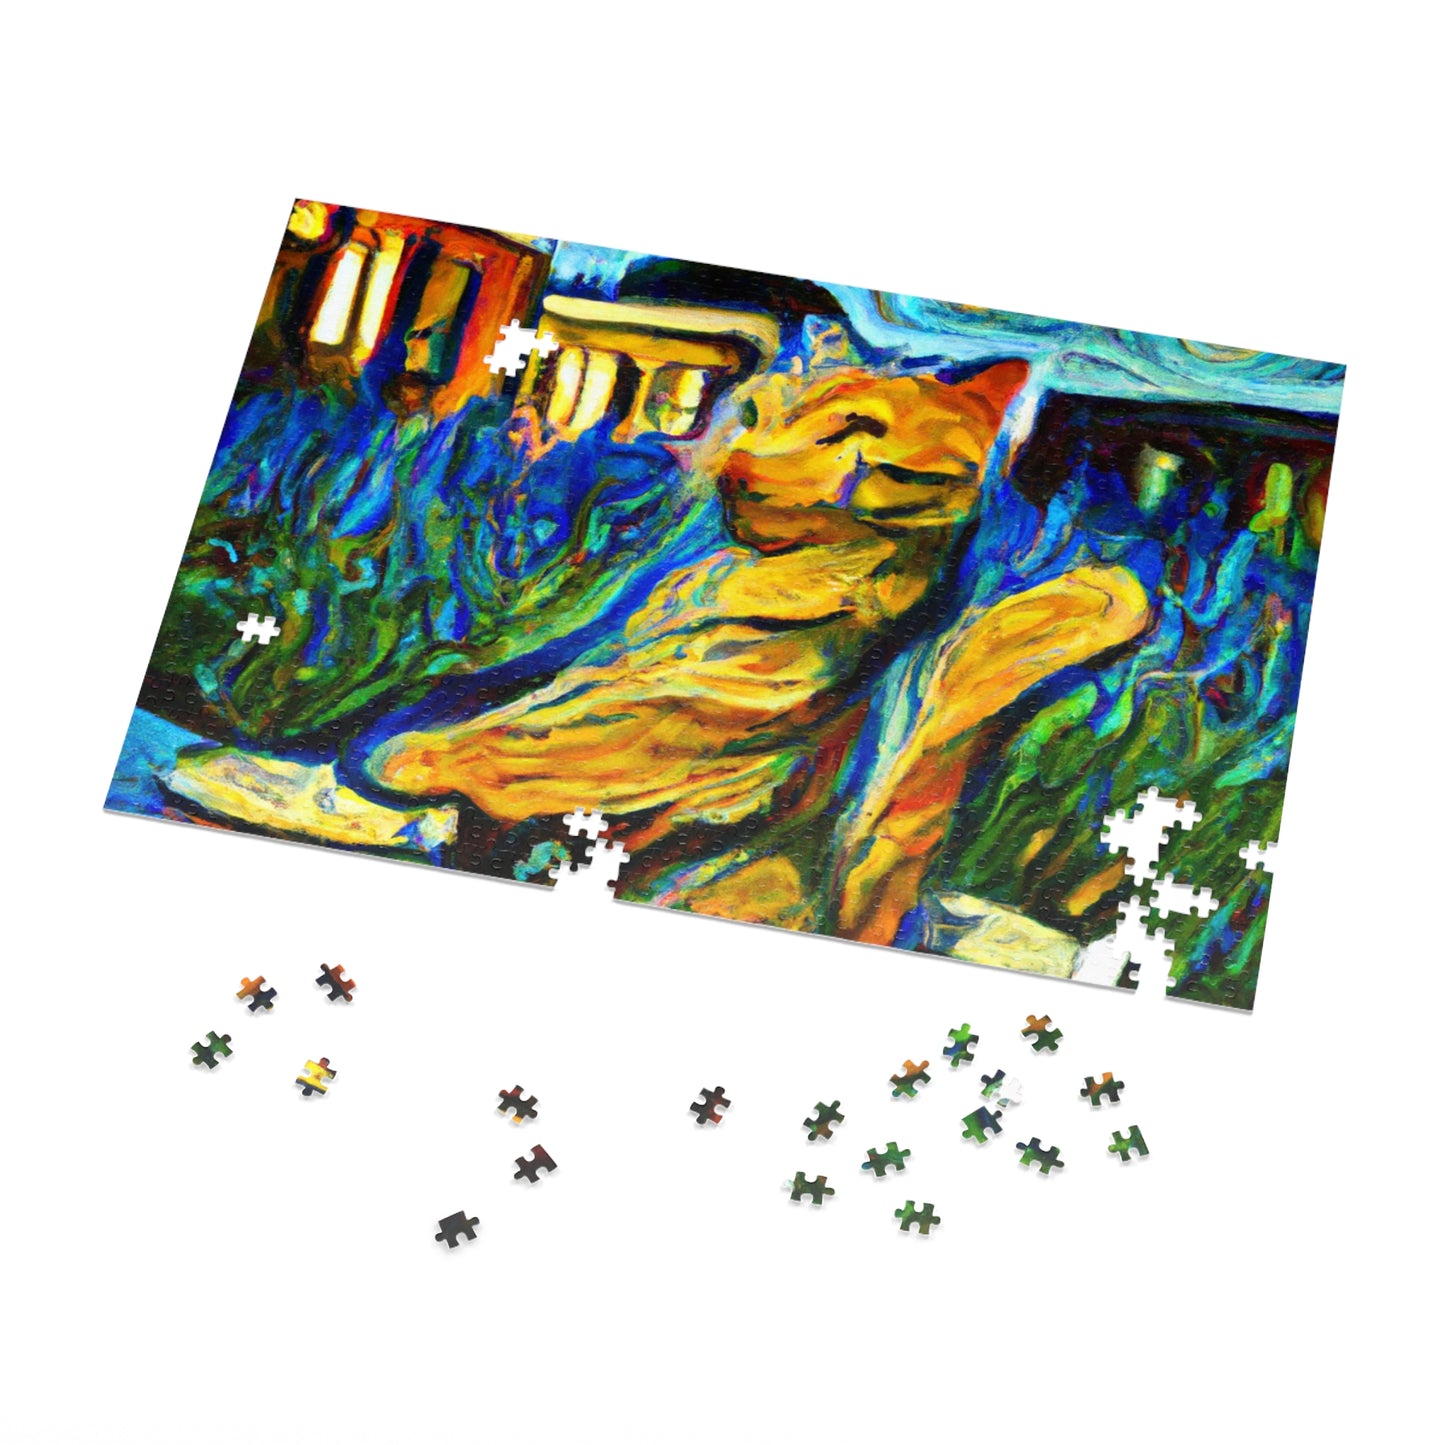 "A Cat Amongst the Celestial Tea Leaves" - The Alien Jigsaw Puzzle